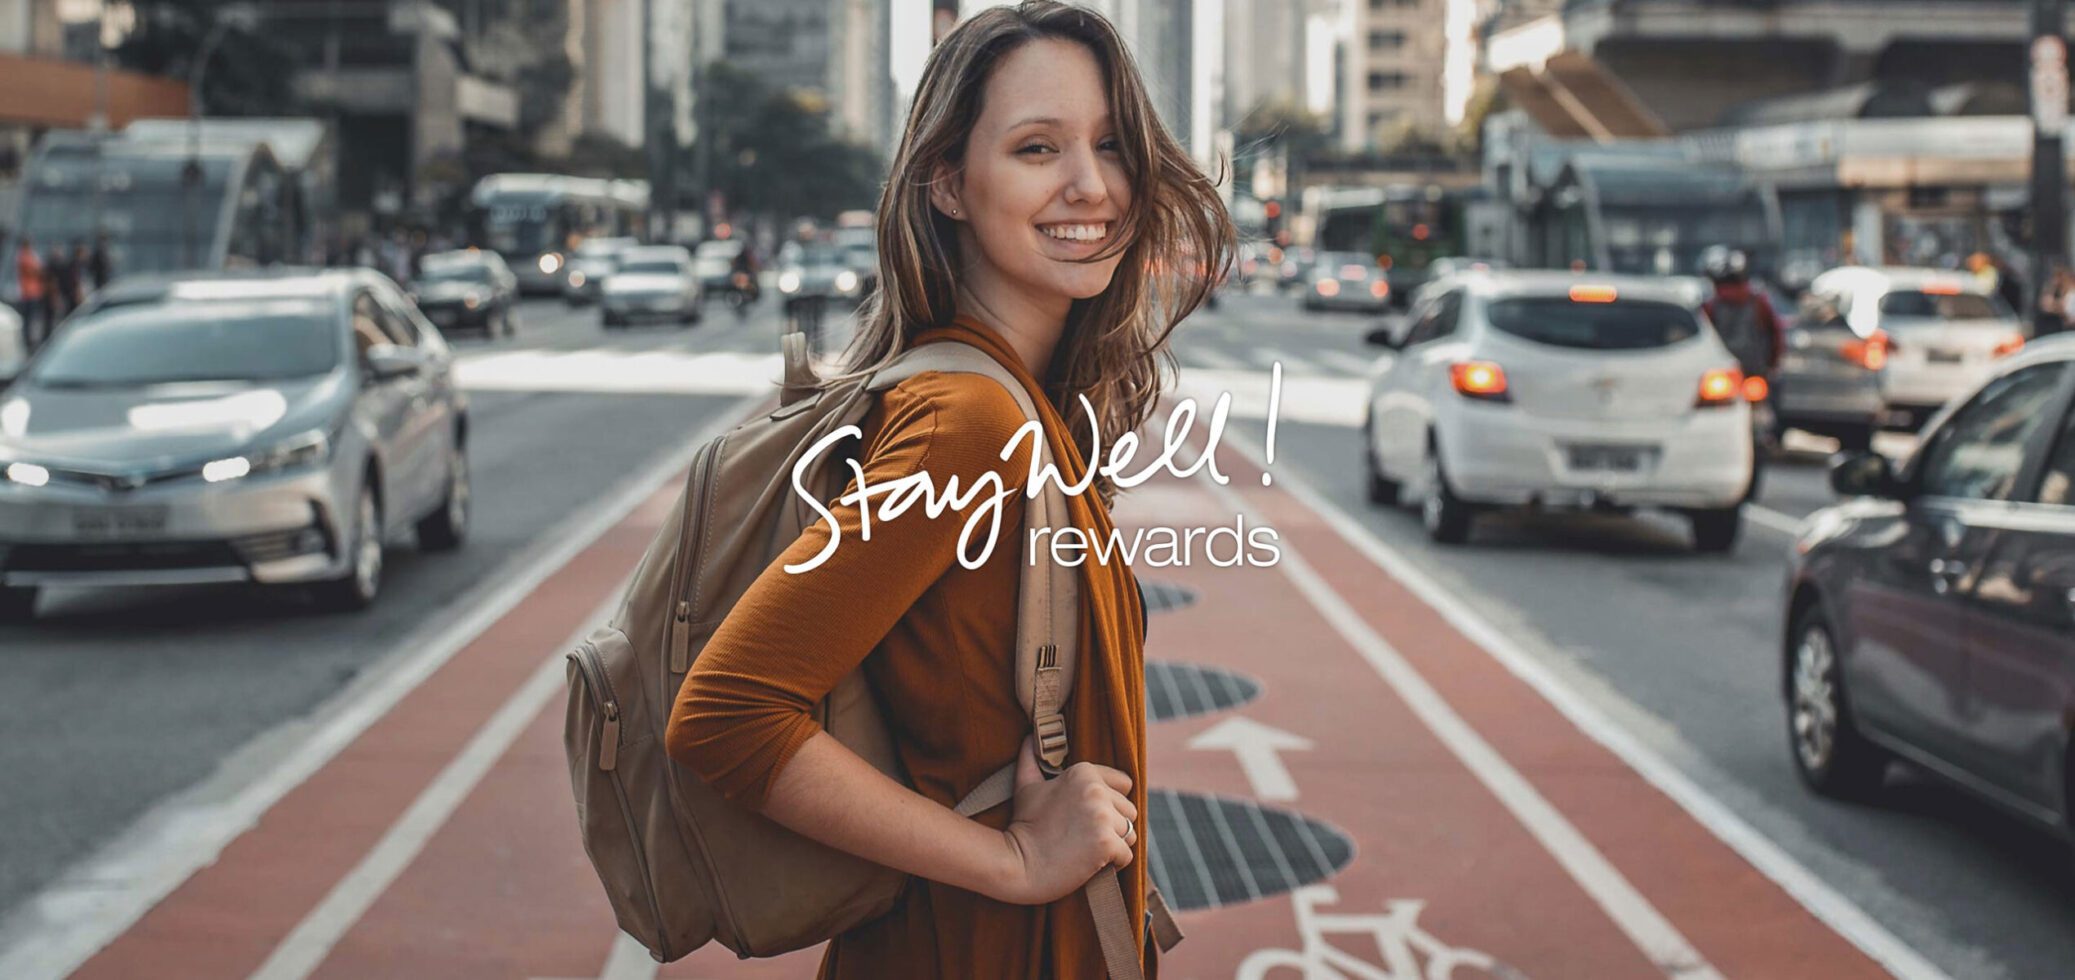 StayWell Rewards program